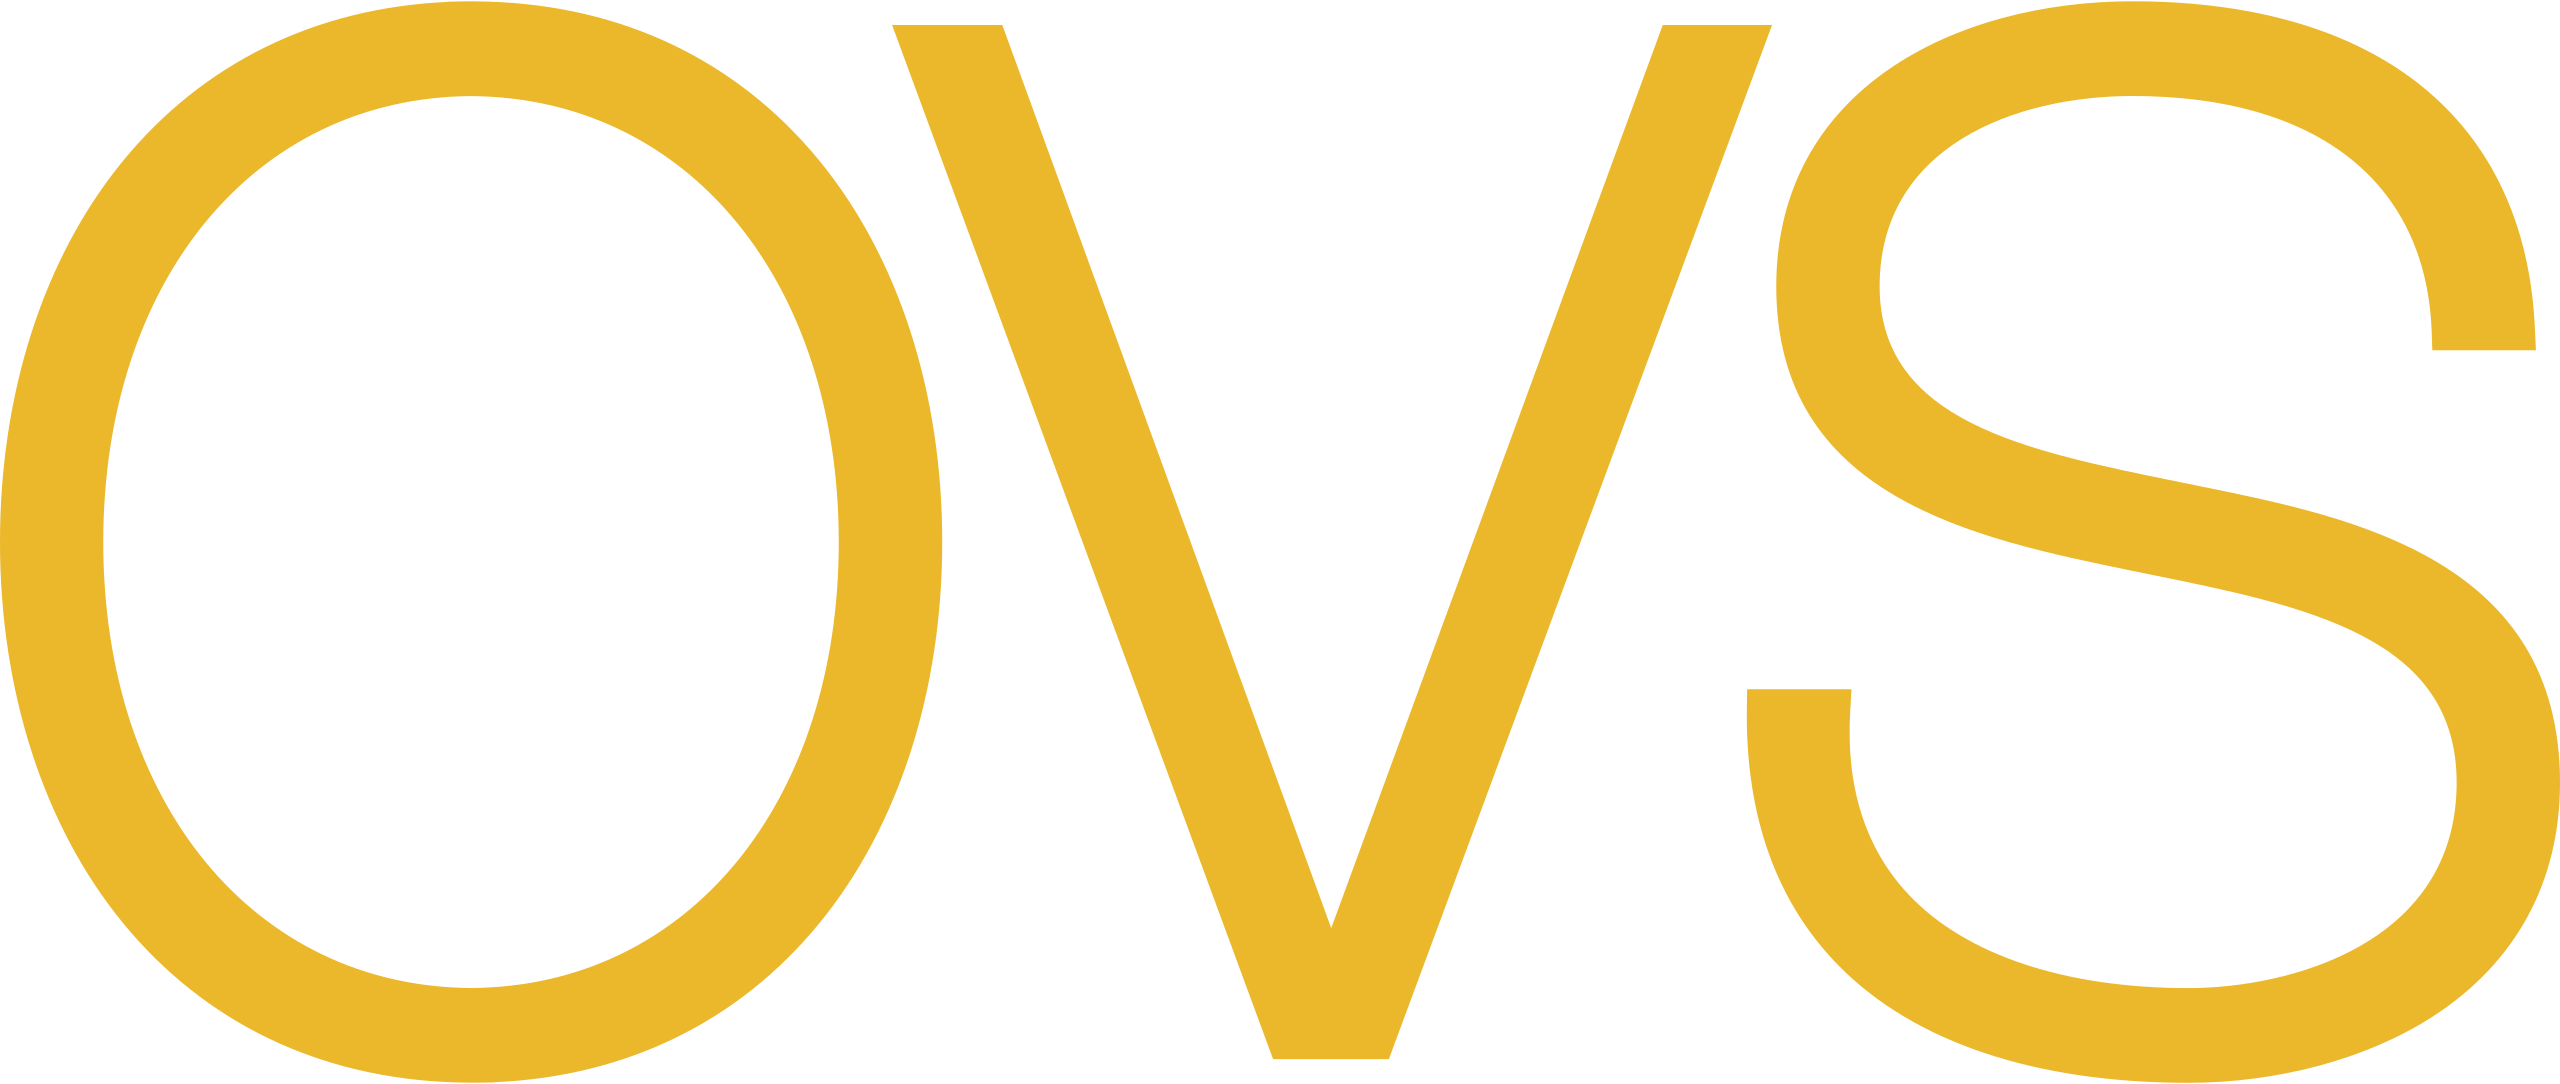 OVS logo 2014 svg